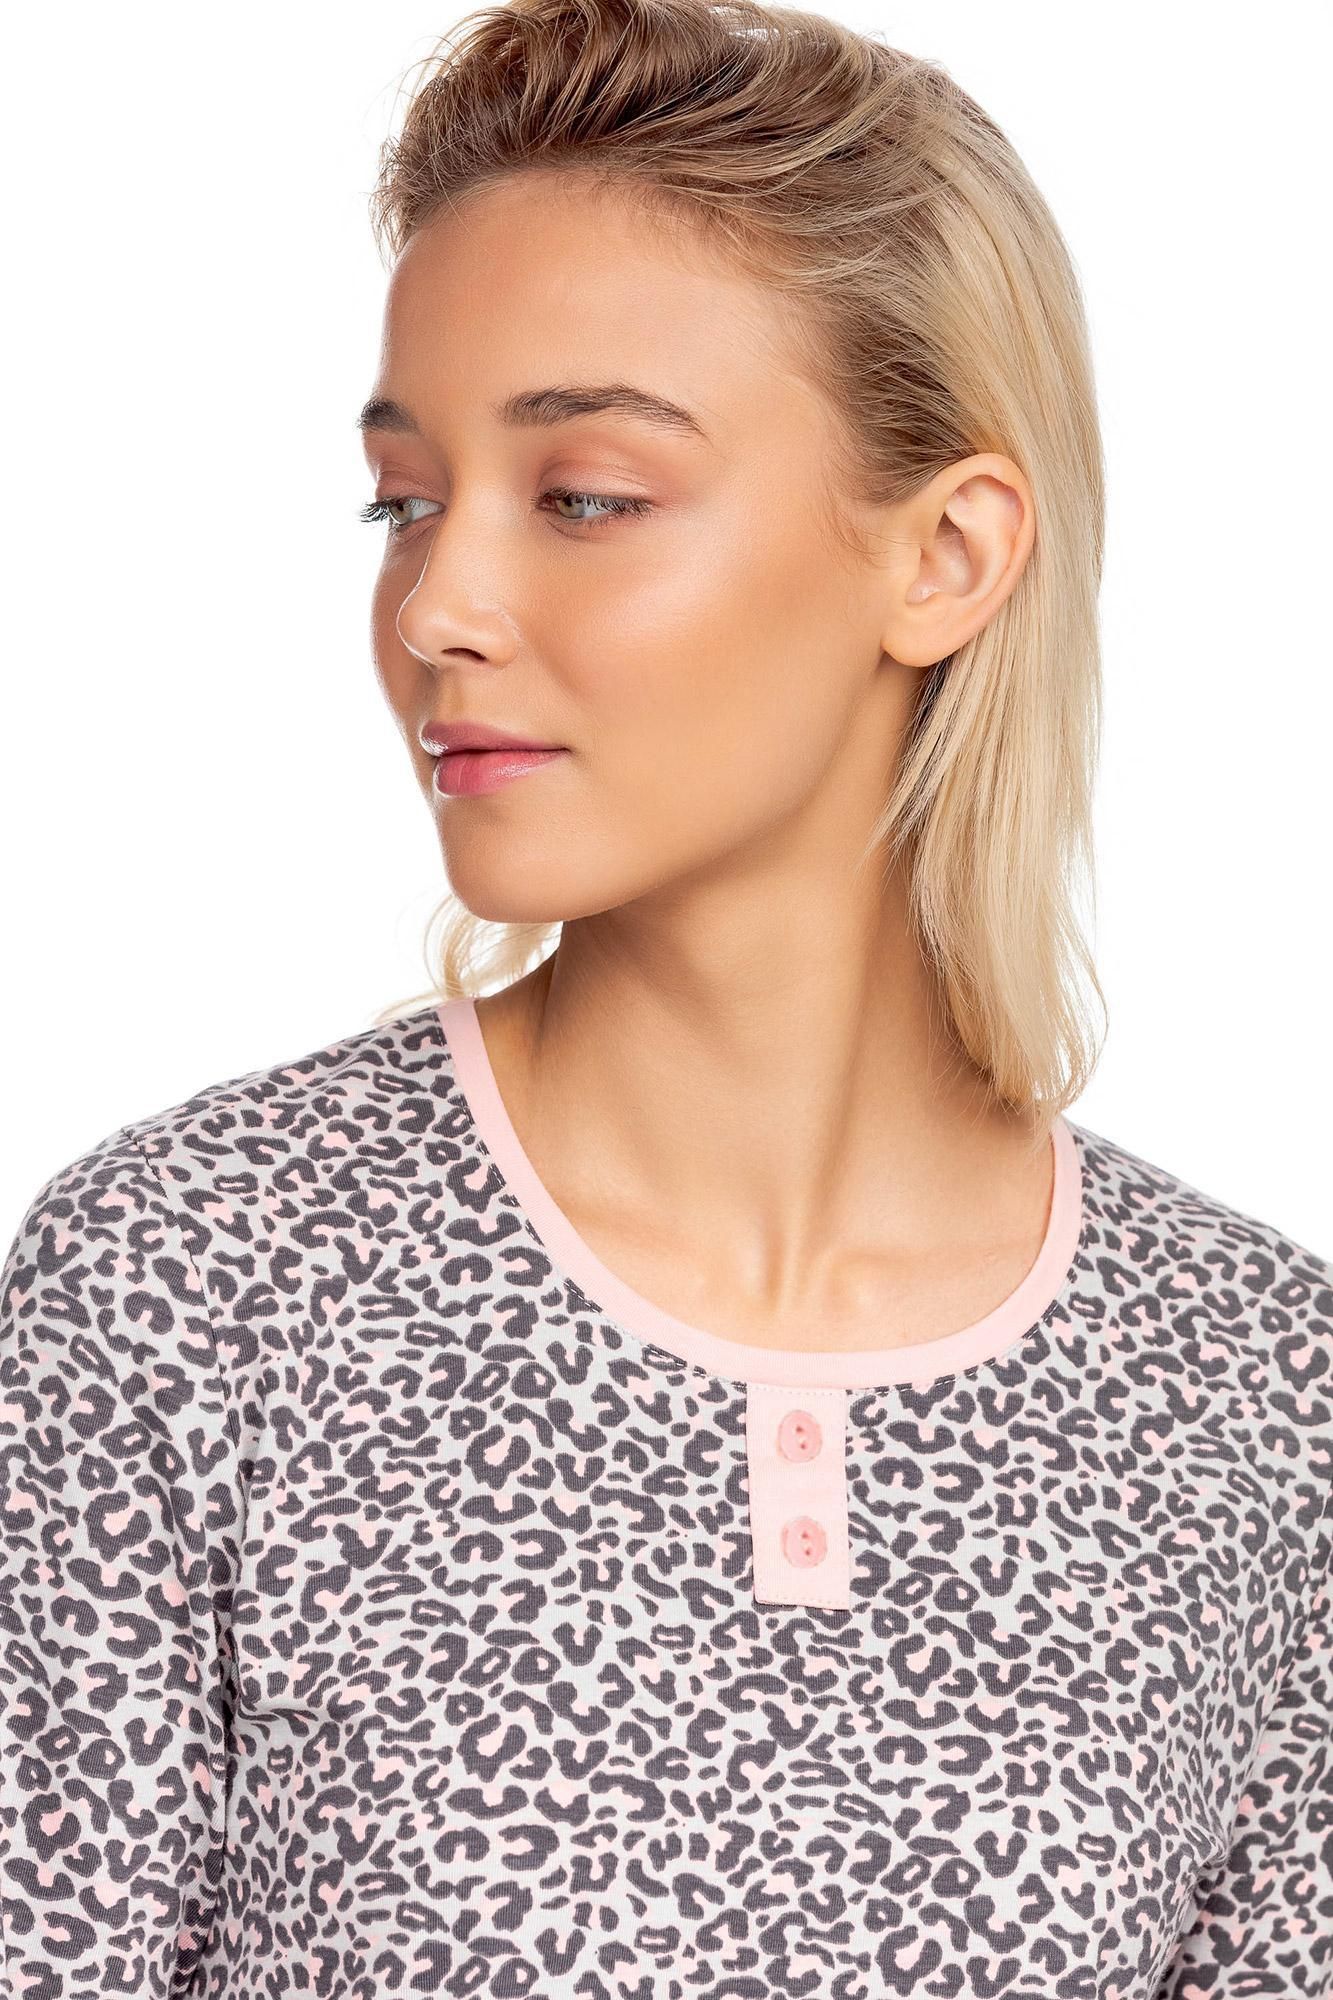 Women’s Leopard Pyjamas